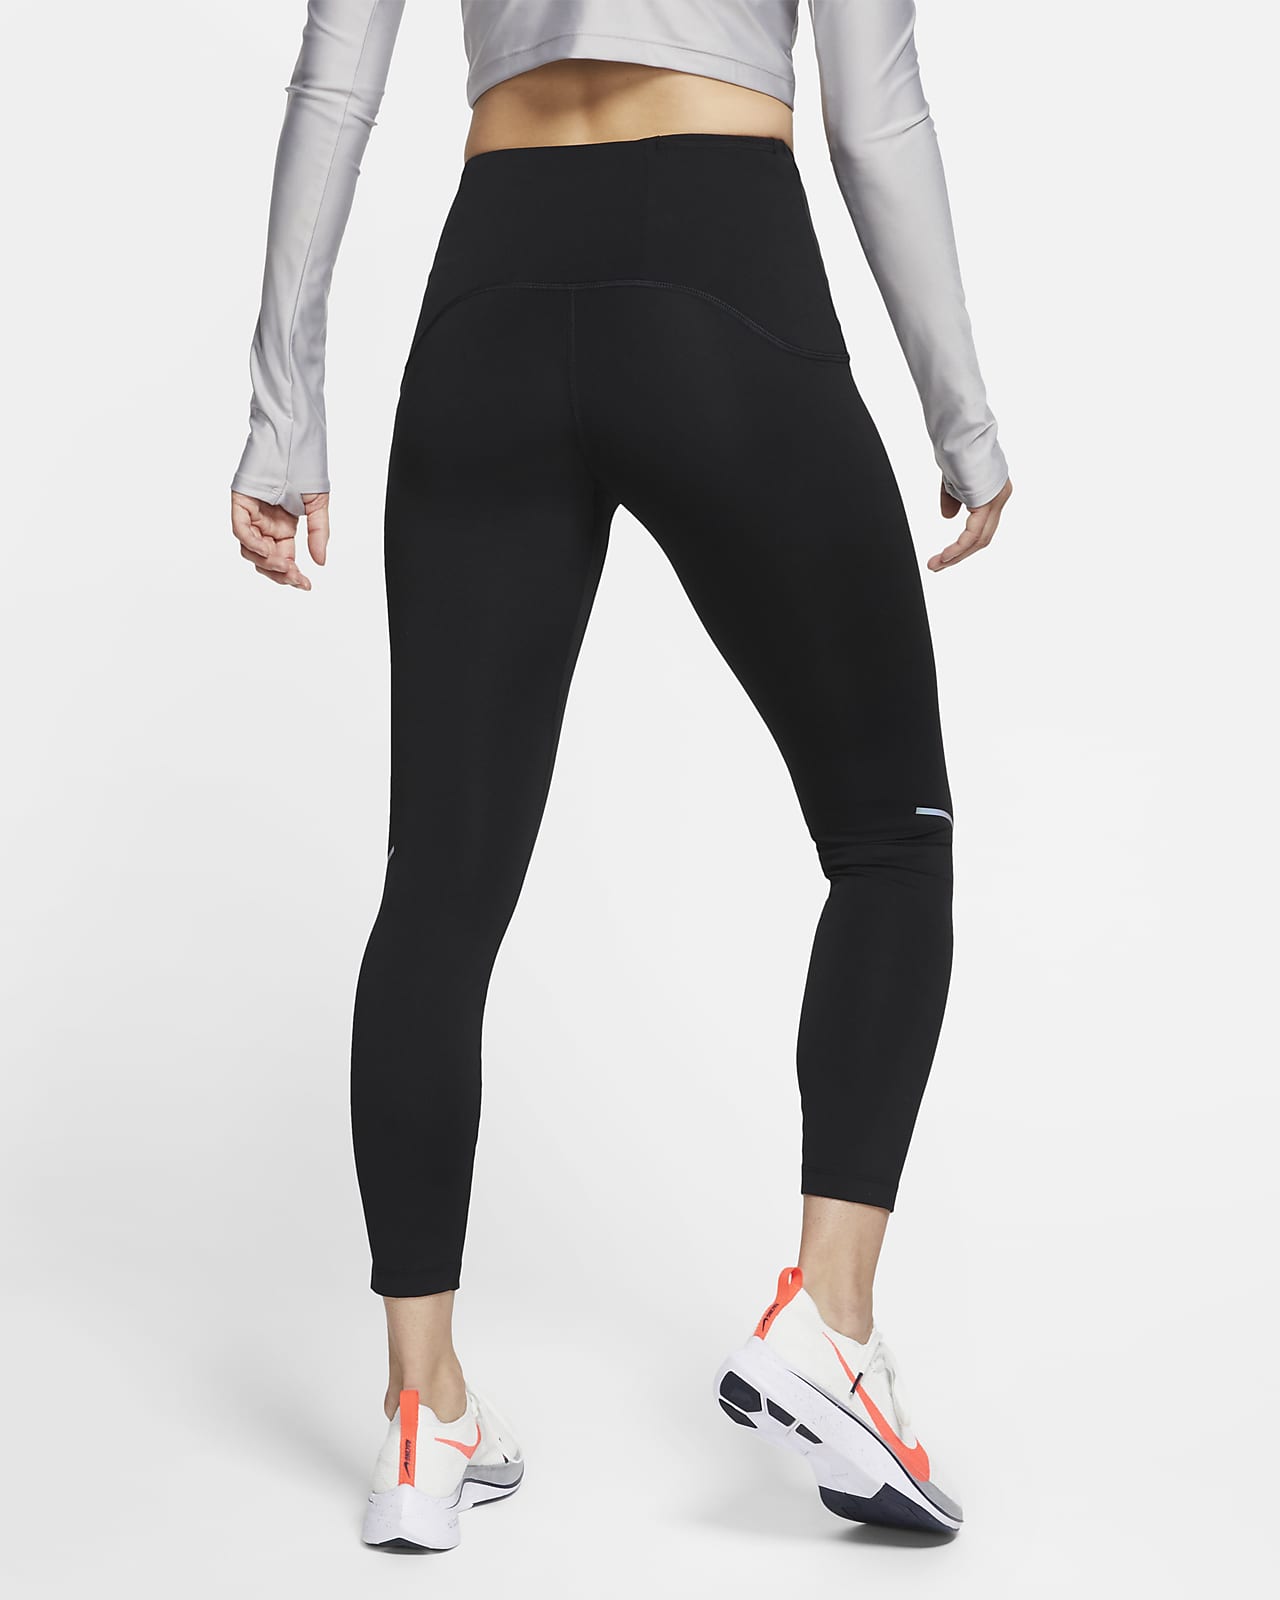 Nike Speed Women's 7/8 Running Tights 